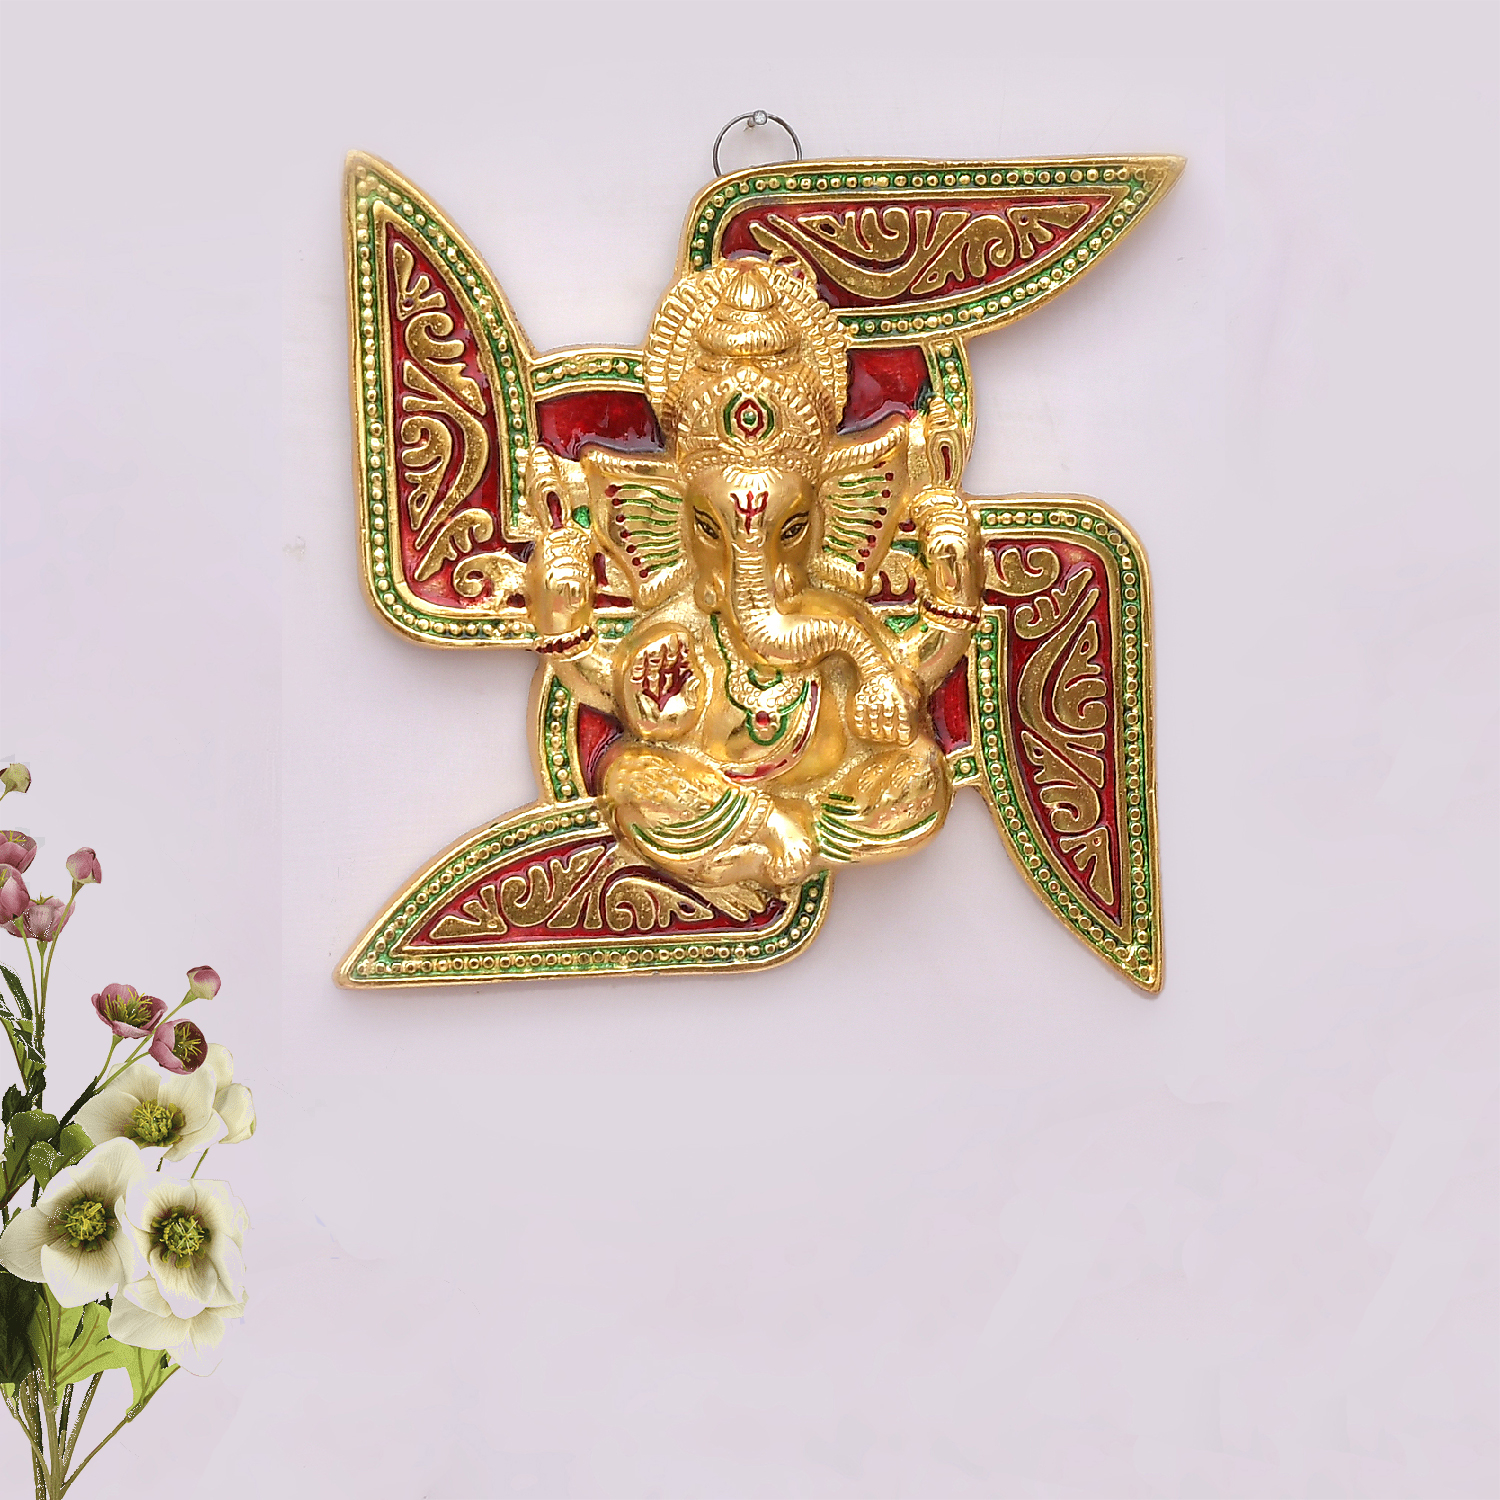 Craftam Alloy Metal Lord Ganesha Swastika Wall Hanging Showpiece Figurine | Metal Handcrafted Decorative Showpiece for Wall Décor, Wall Hangings, Home Décor, Diwali Décor – Gold